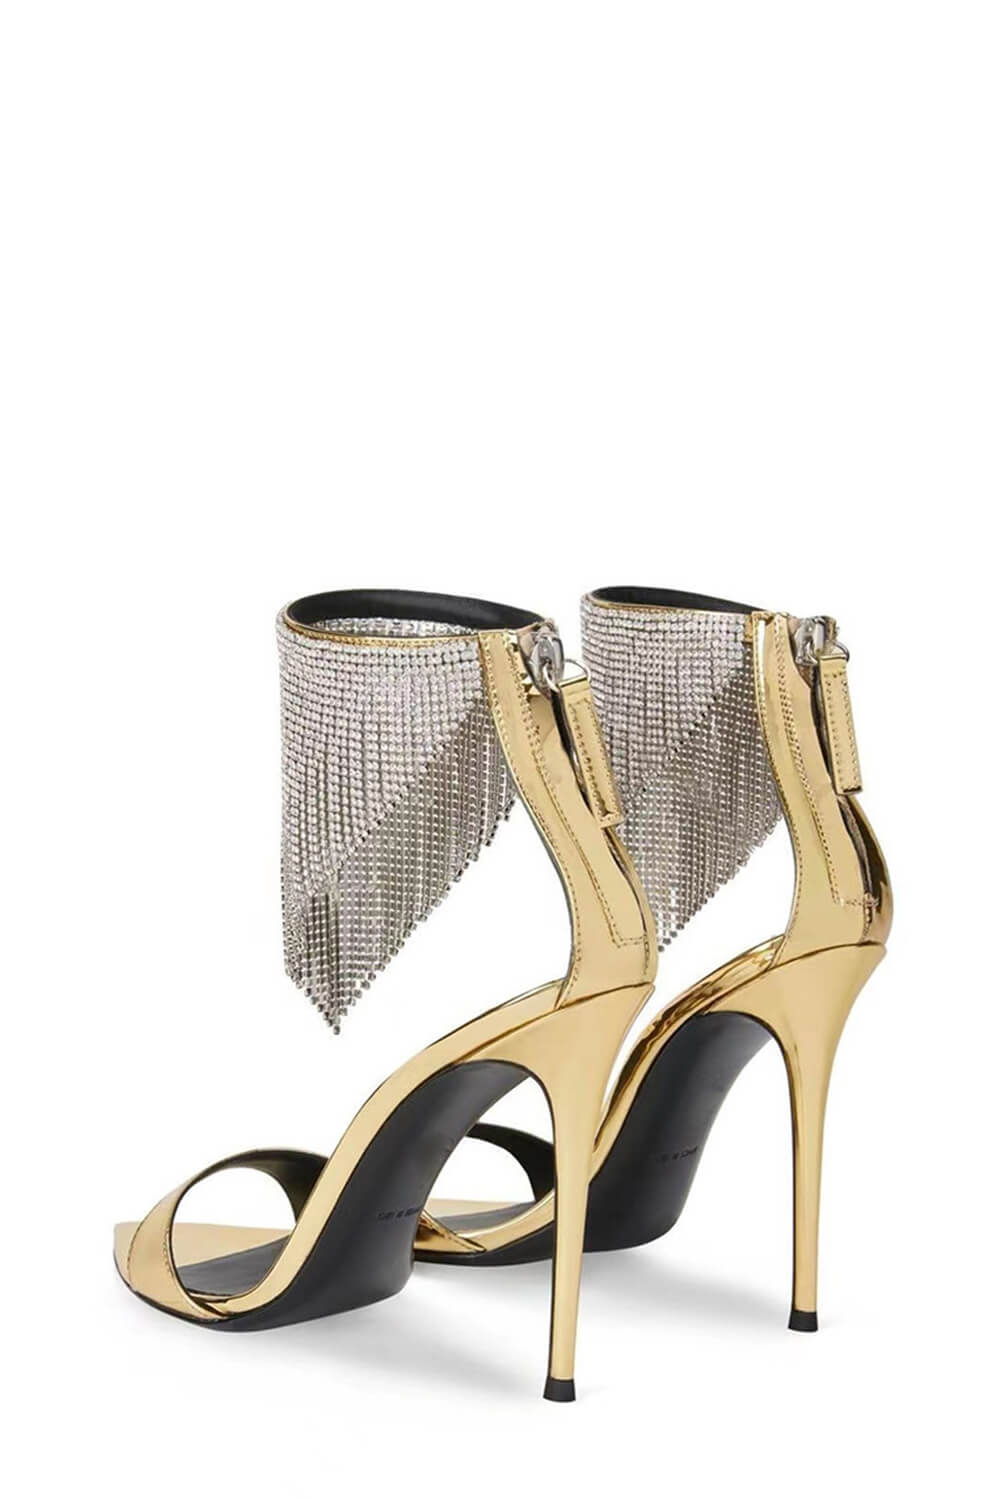 Crystal Rhinestones Fringed Open Pointed Toe Stiletto Heeled Sandals - Gold